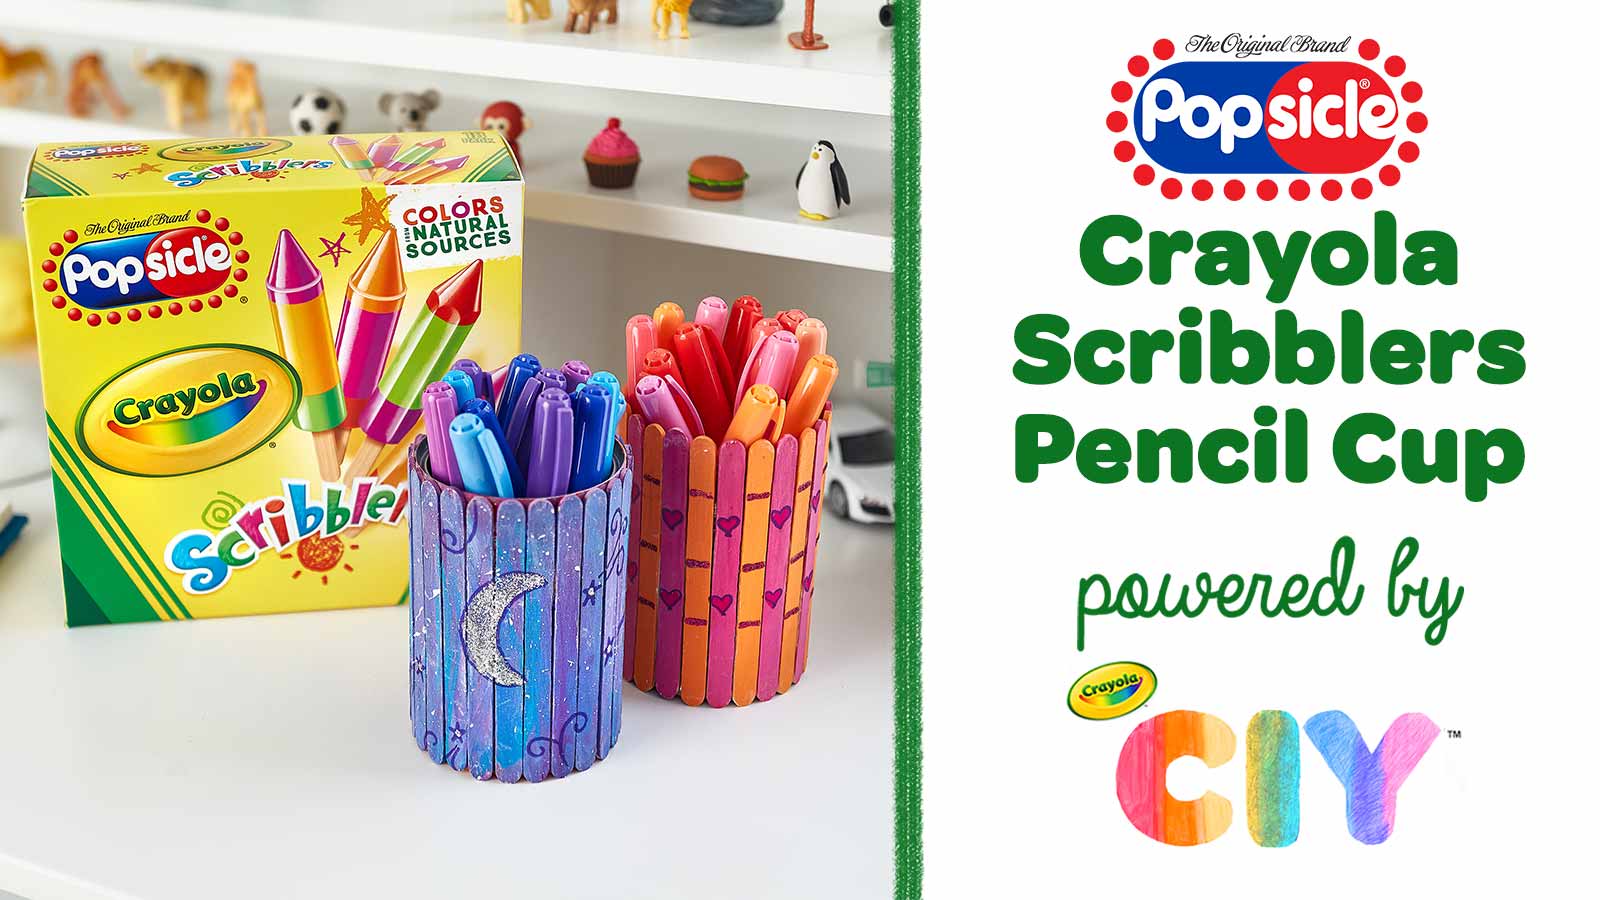 https://www.crayola.com/-/media/Crafts-New/Poster-Frames/Crayola-Scribblers-Popsicle-Stick-Pencil-Cup_Poster-Frame/FINAL-Crayola-Scribblers-Popsicle-Stick-Pencil-Cup_Poster-Frame.jpg